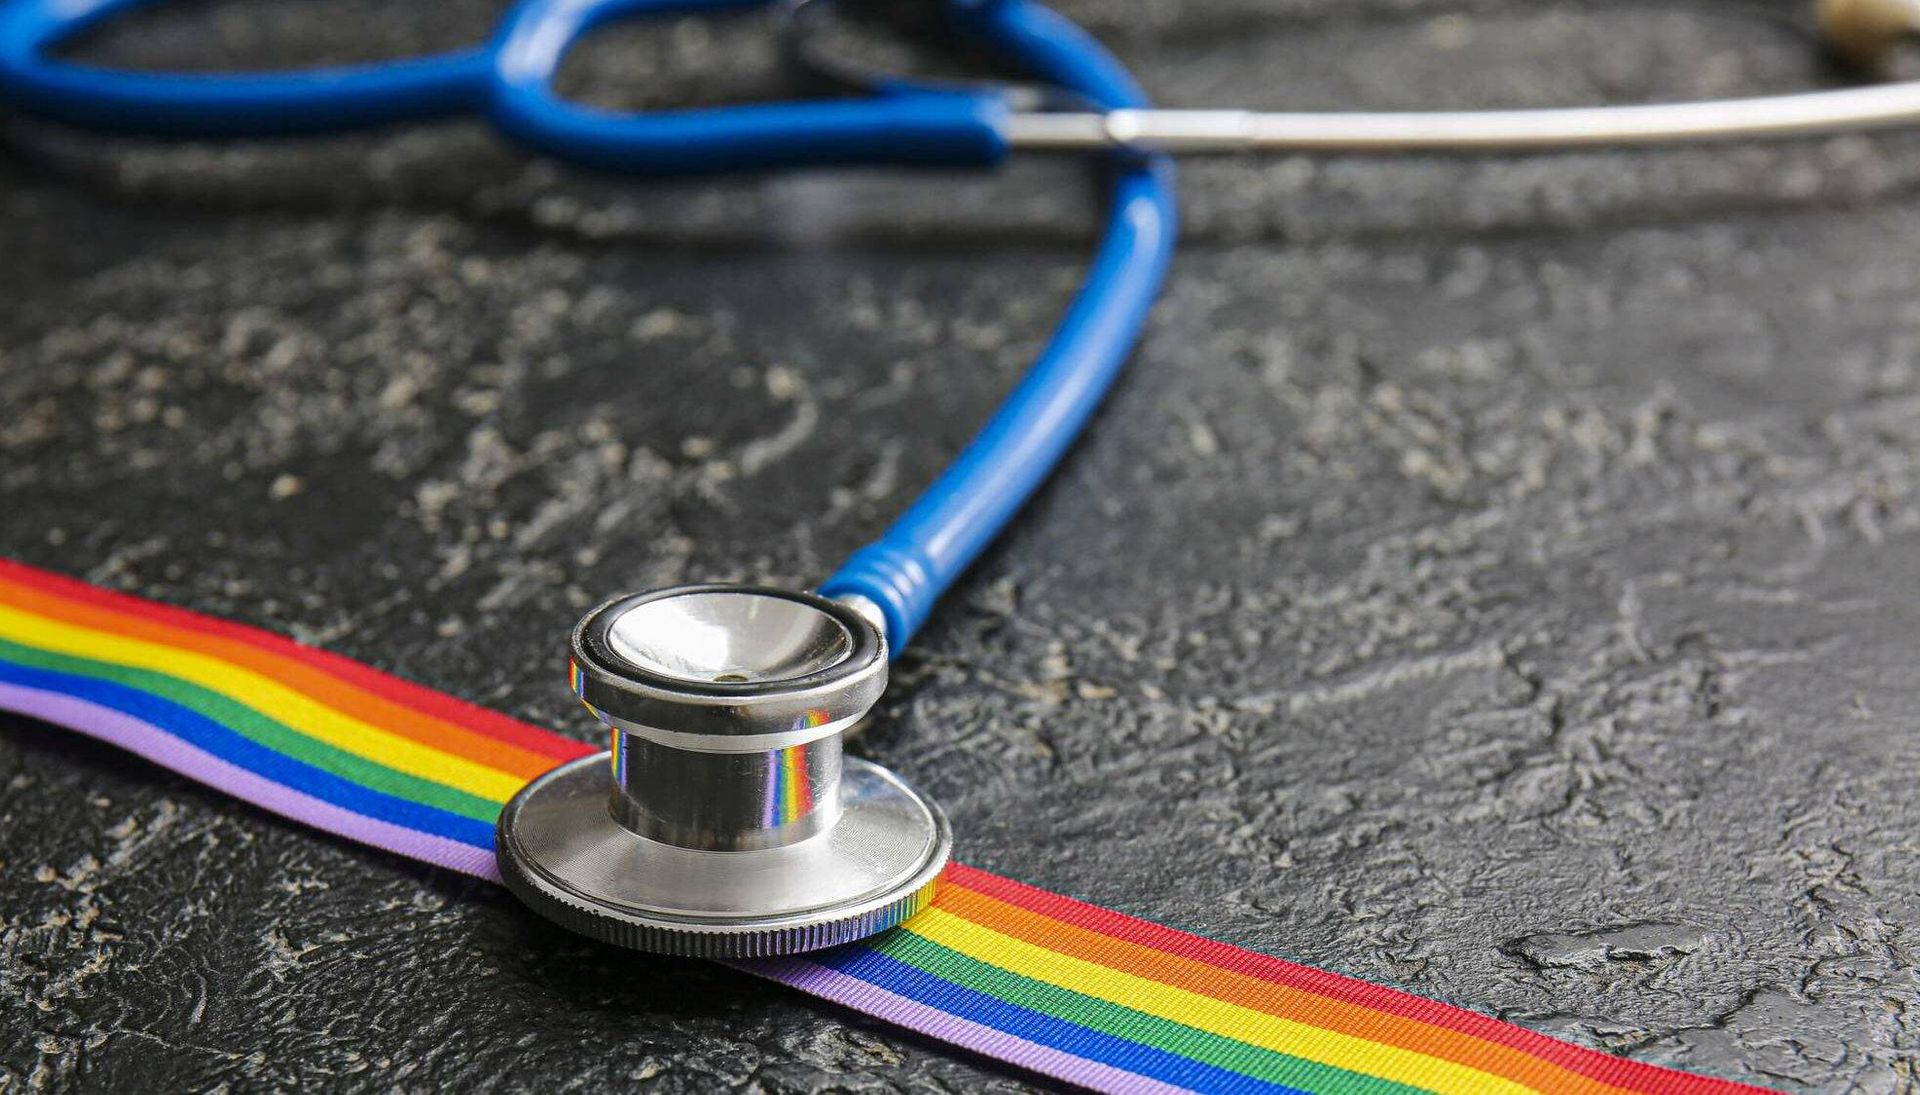 Photograph of stethoscope and rainbow ribbon on dark background